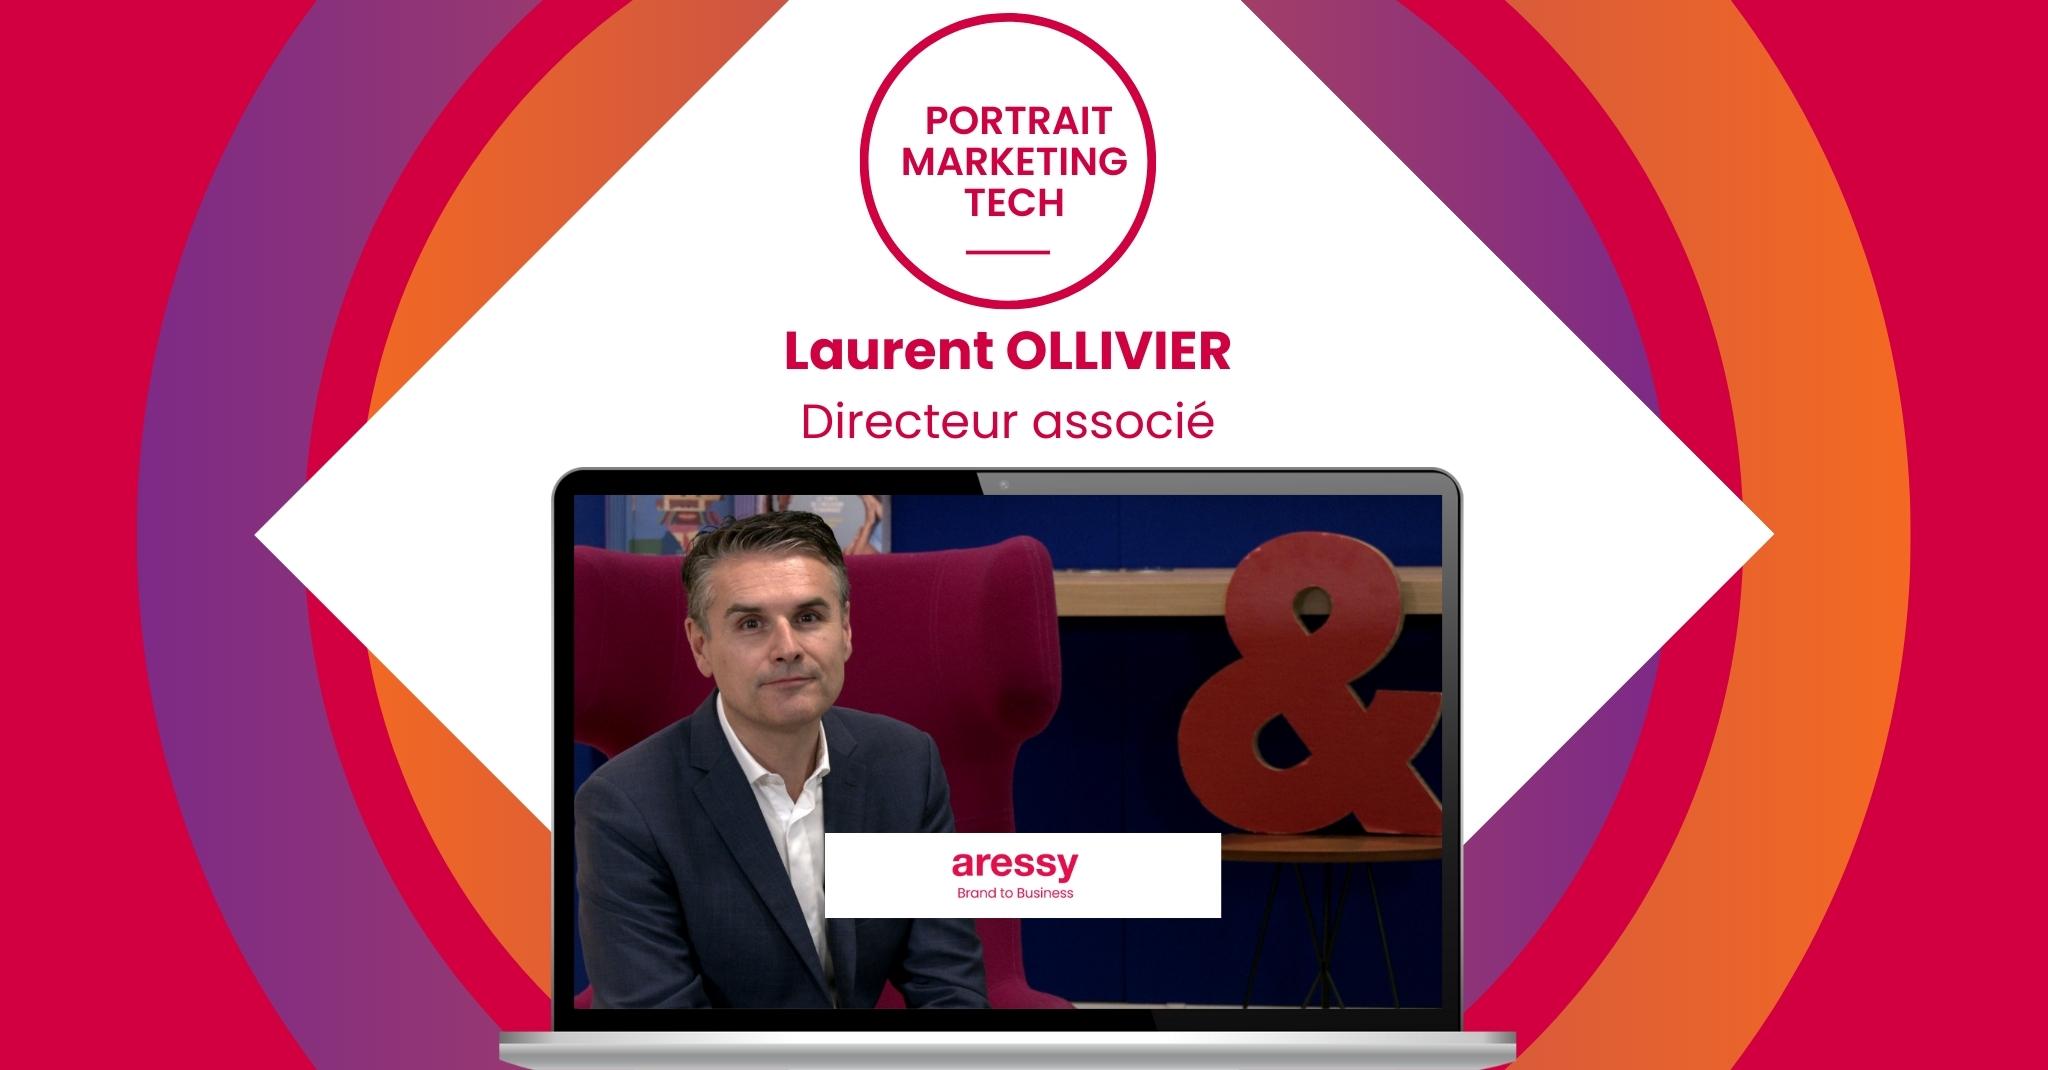 Portrait Marketing Tech Laurent Ollivier - Aressy